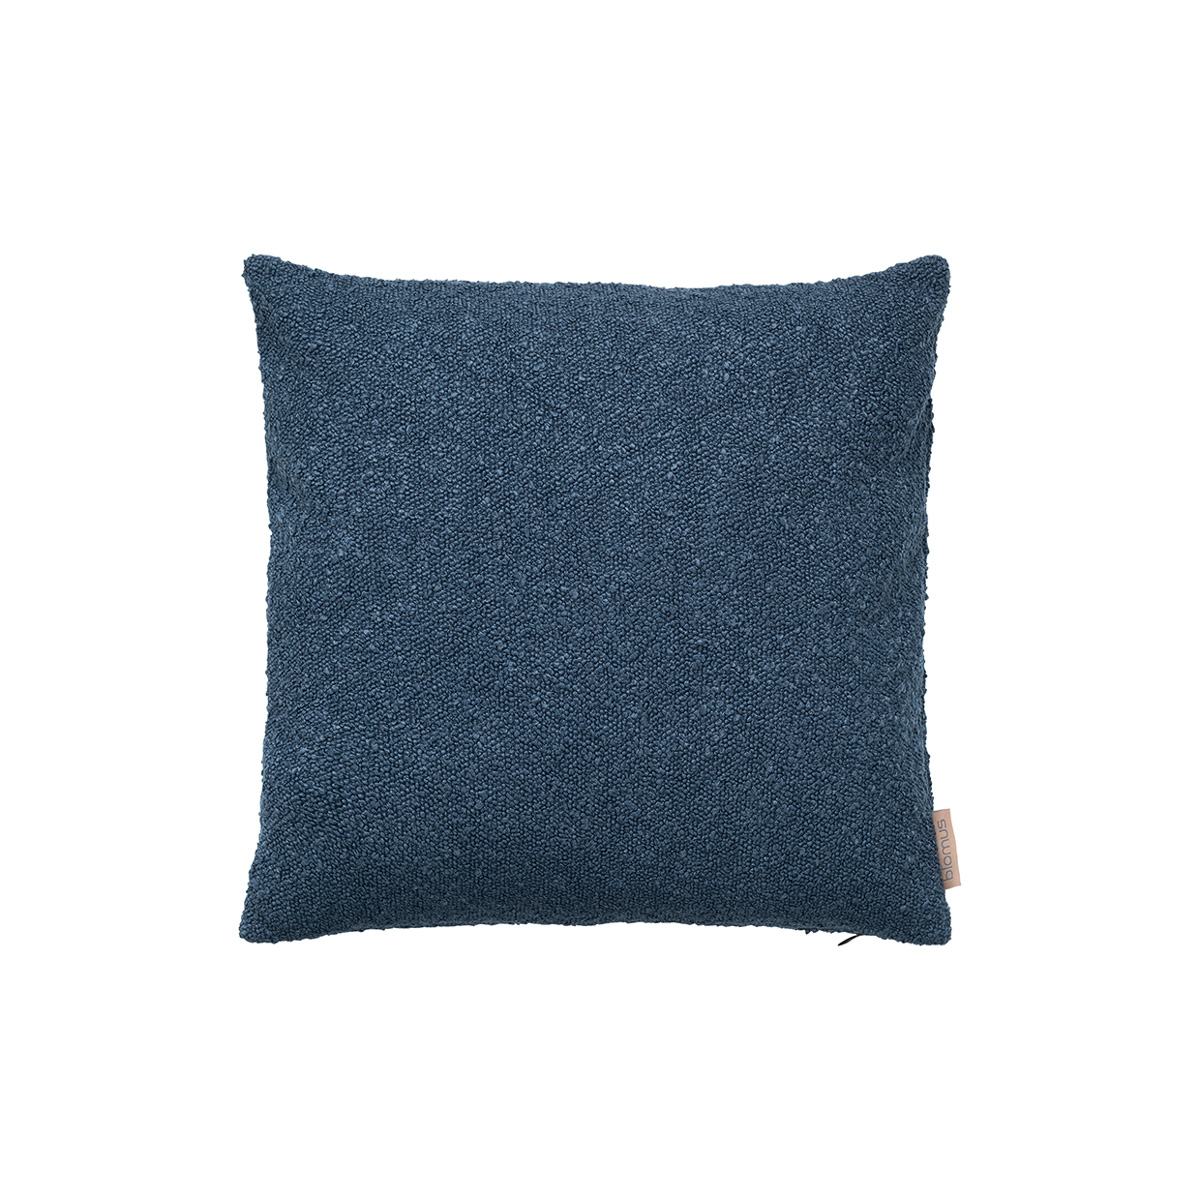 Kissenbezug -BOUCLE- Midnight Blue 40 x 40 cm. Material: 90% Polyester, 10% Acryl. Von Blomus.